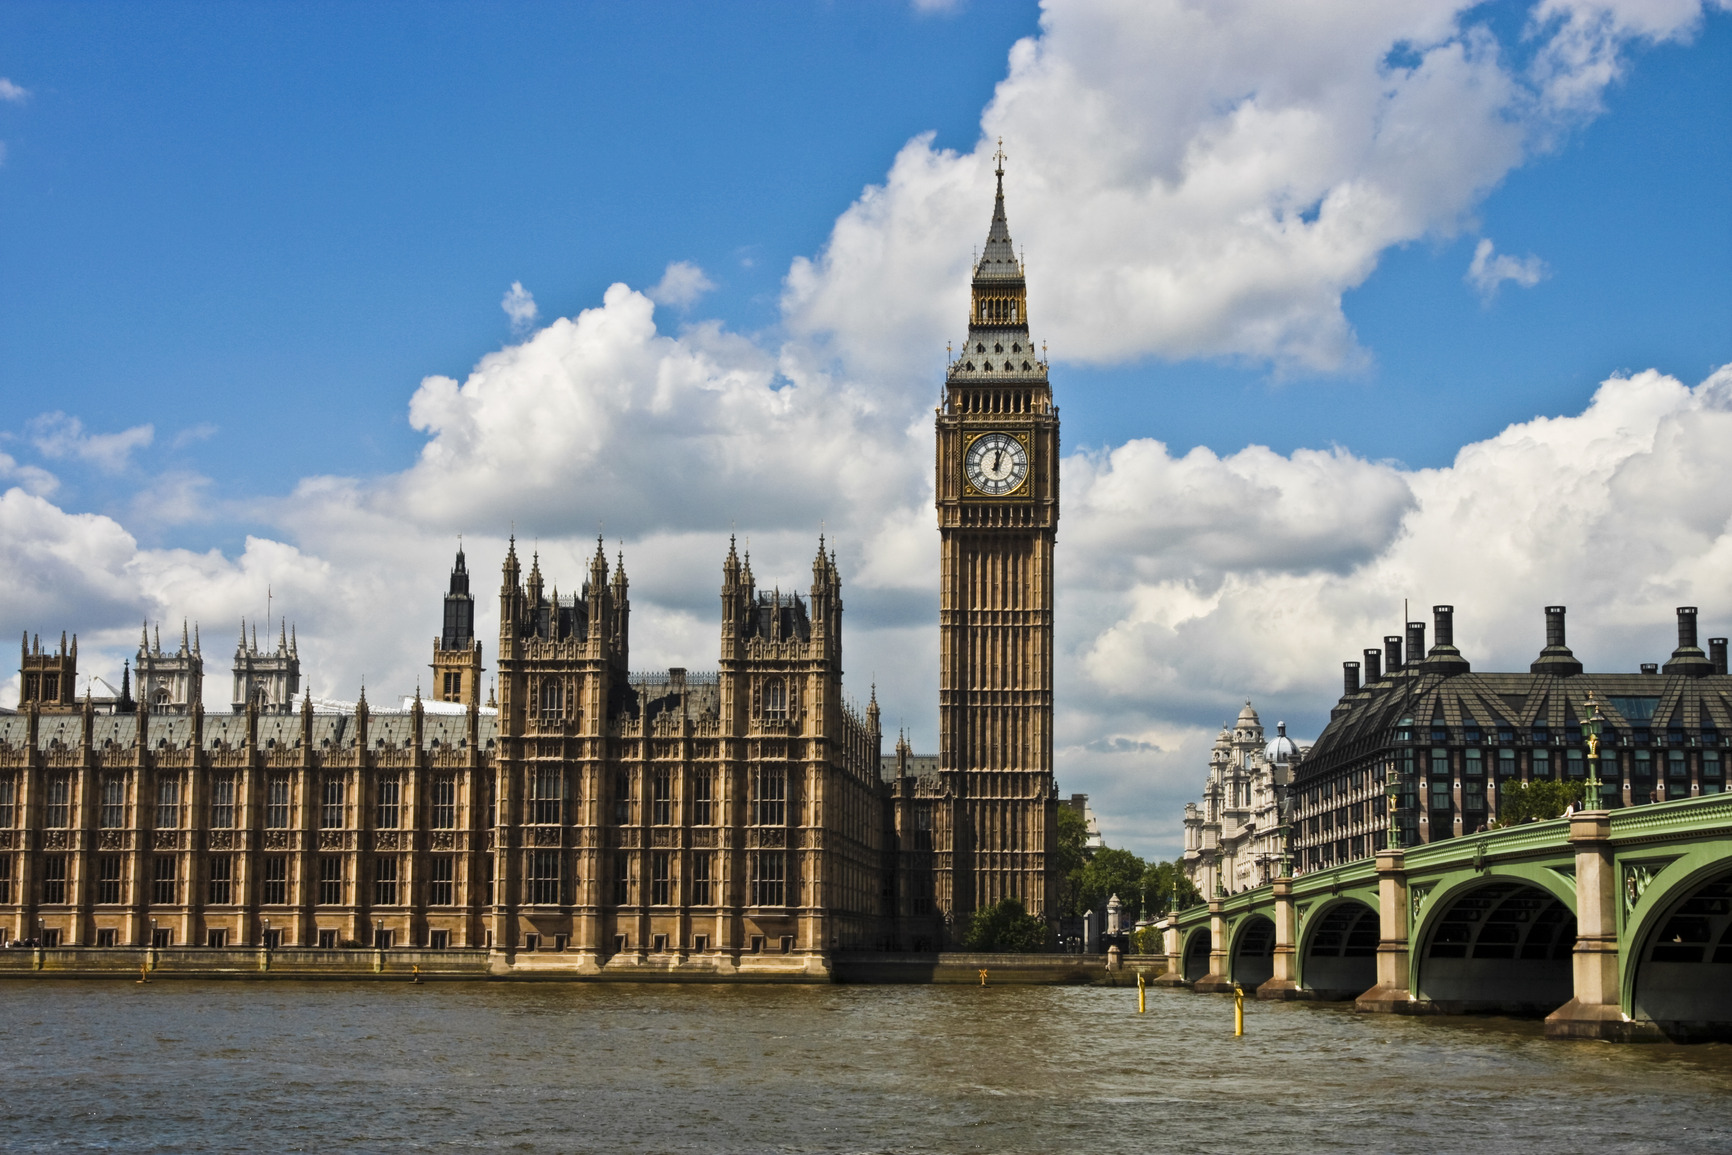 Big Ben Clock in London - Traveldaily